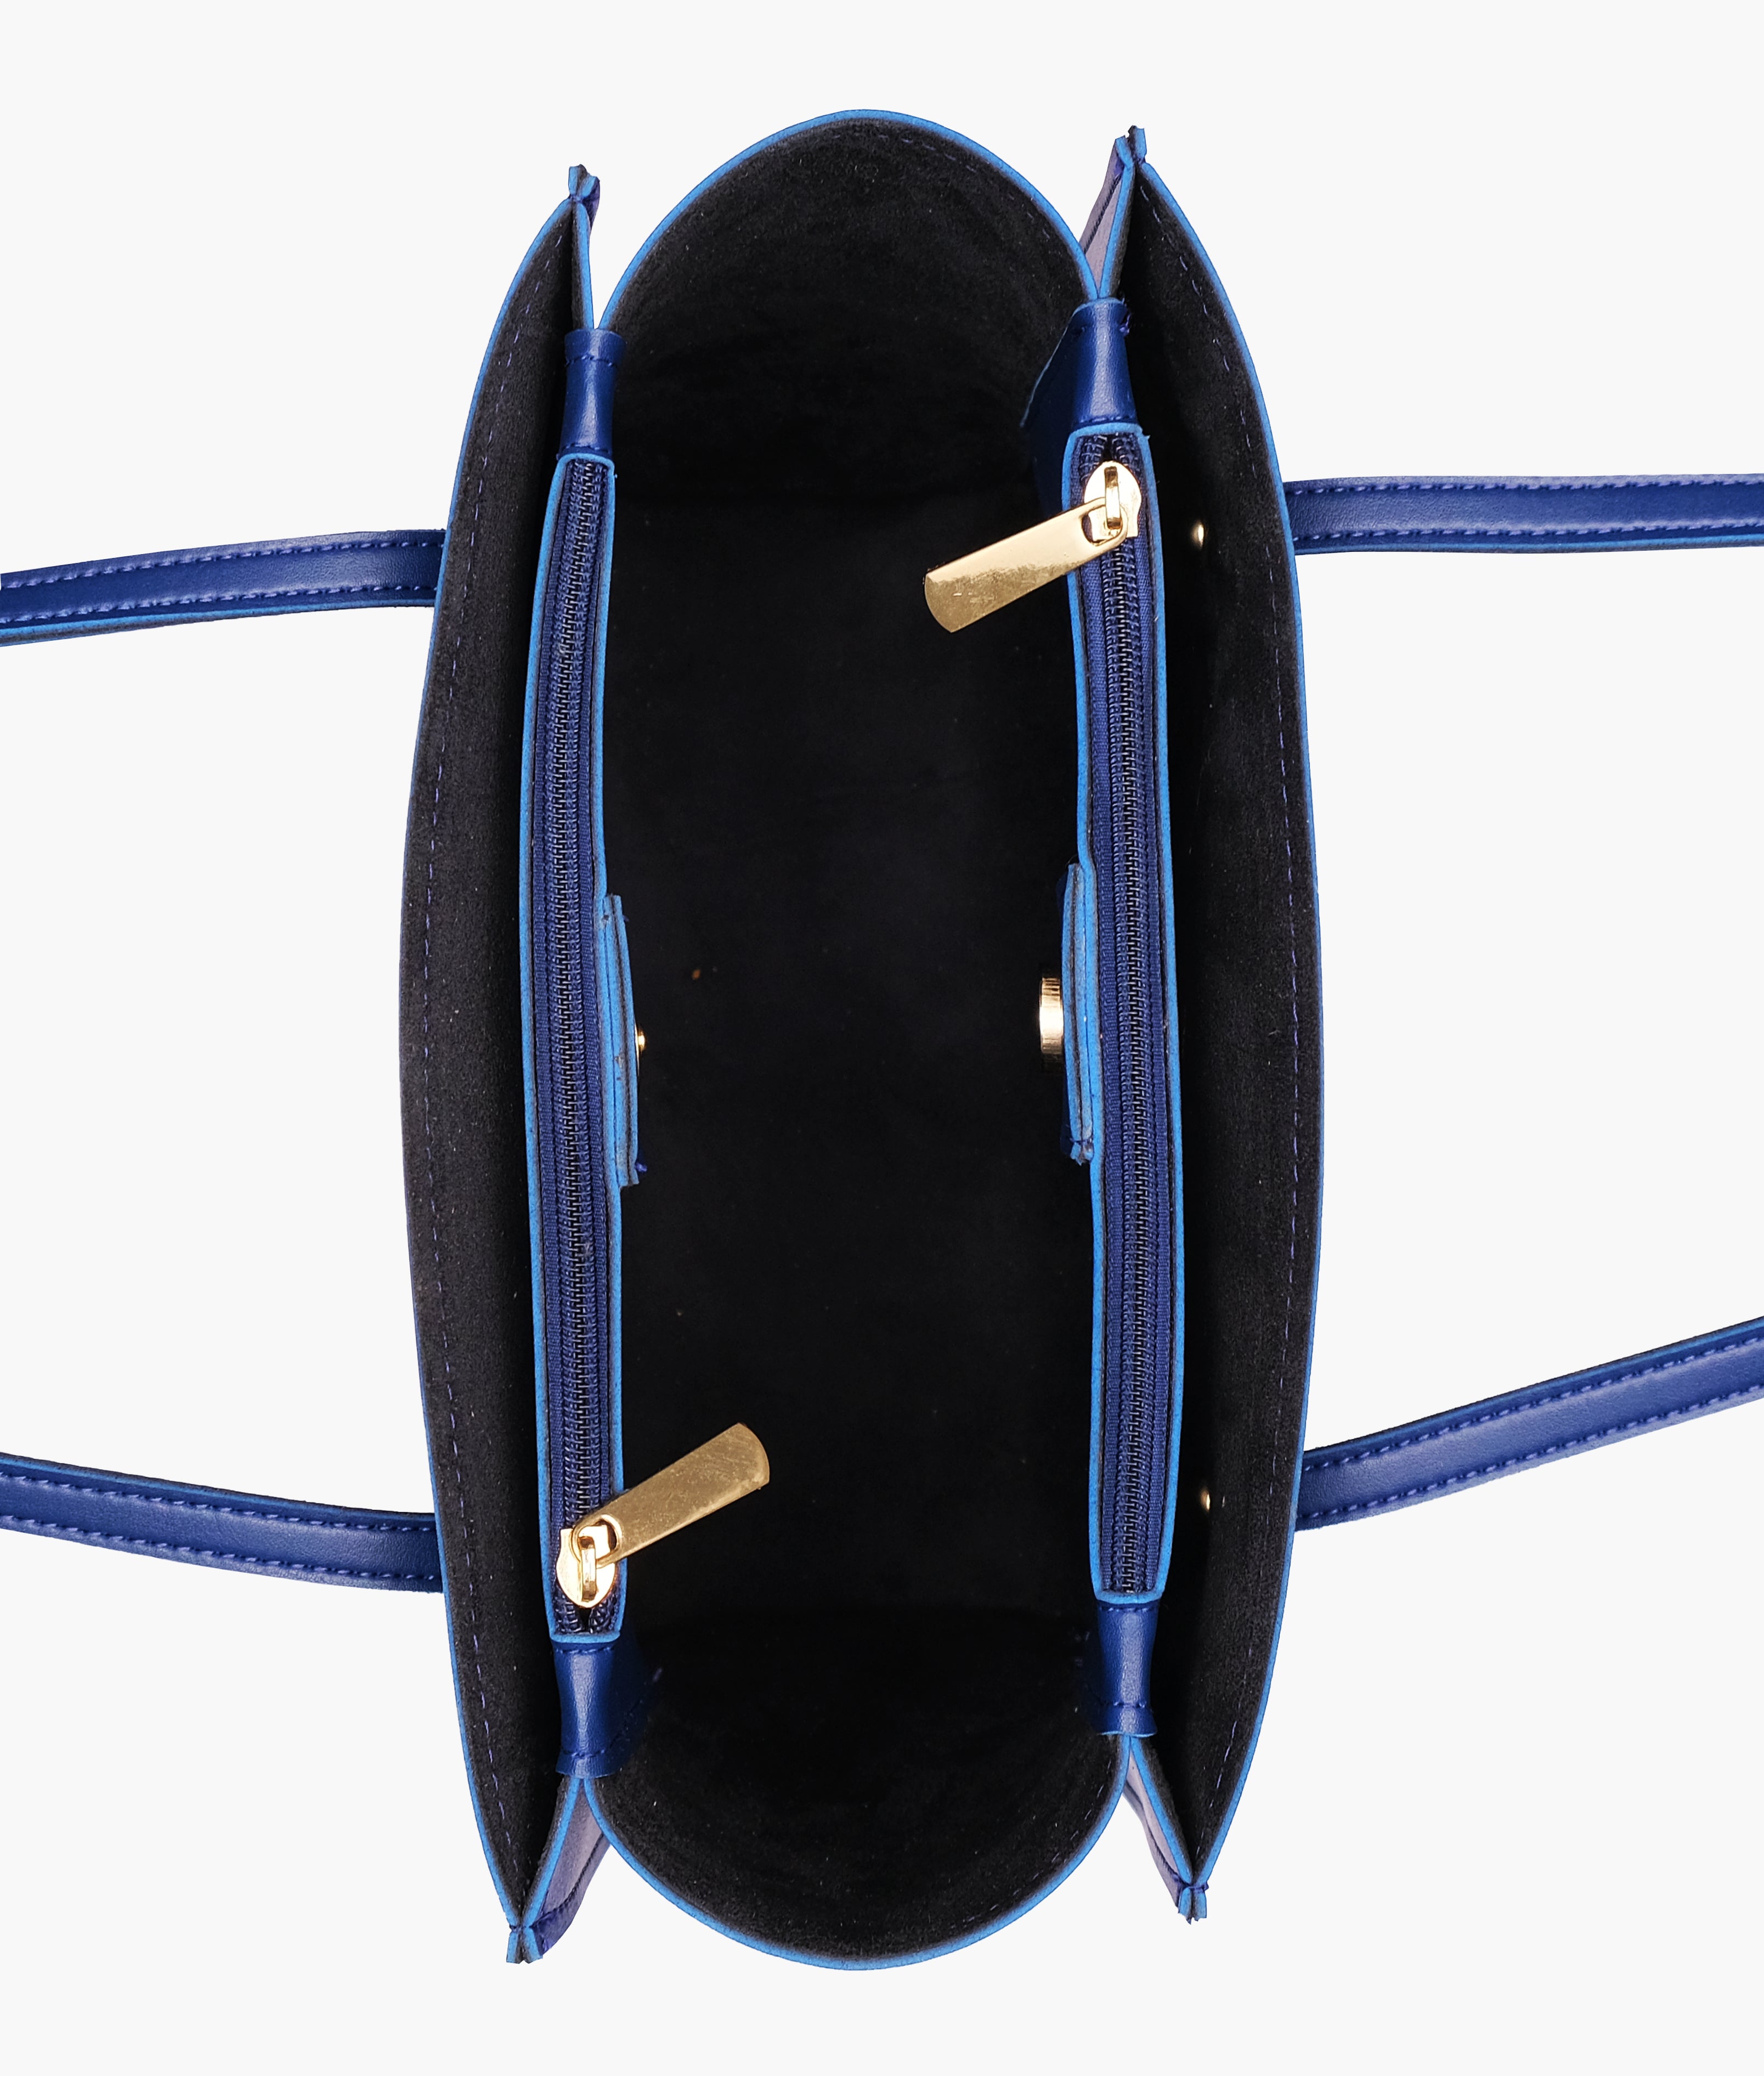 Blue zipper shoulder bag with long handle